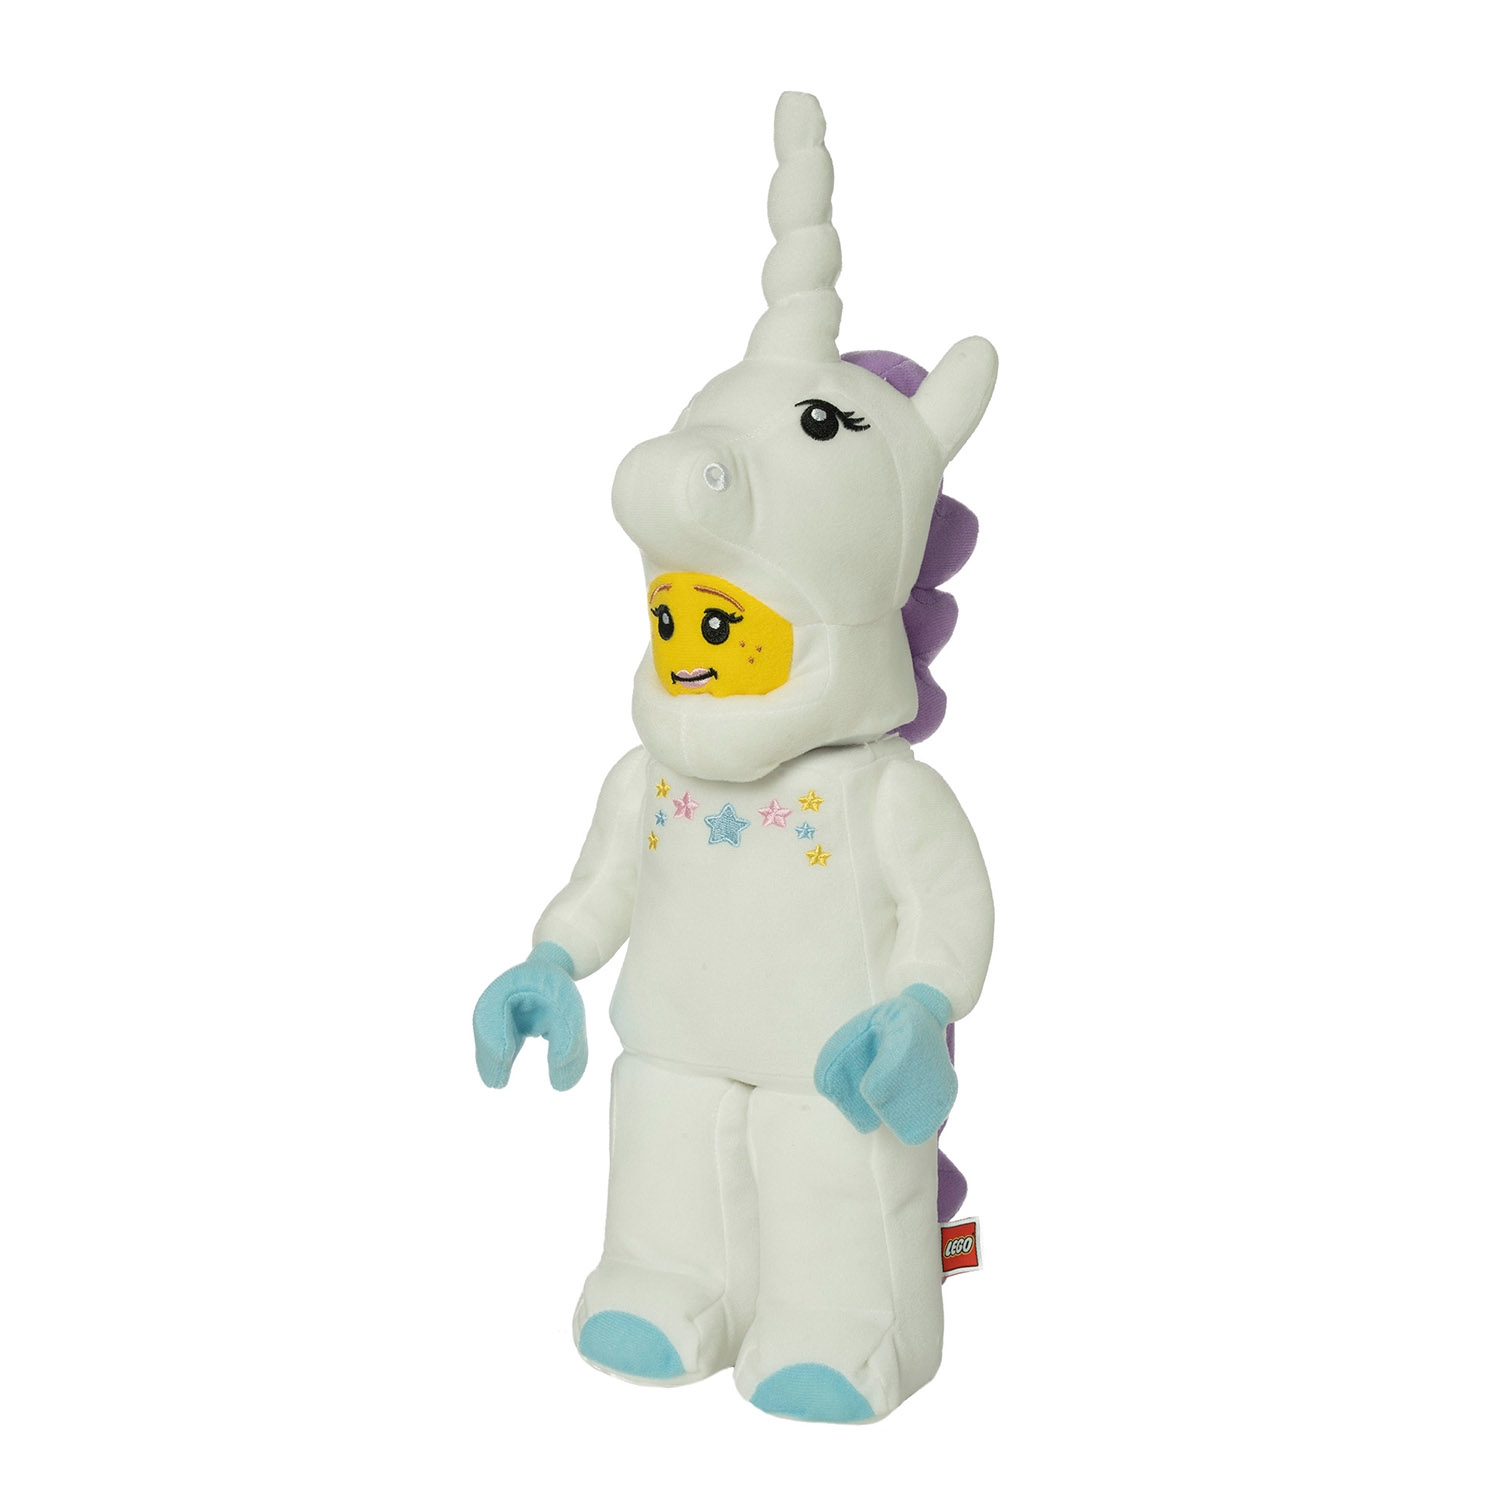 Modtagelig for reb Forkludret Unicorn Girl Plush 5006625 | Other | Buy online at the Official LEGO® Shop  US